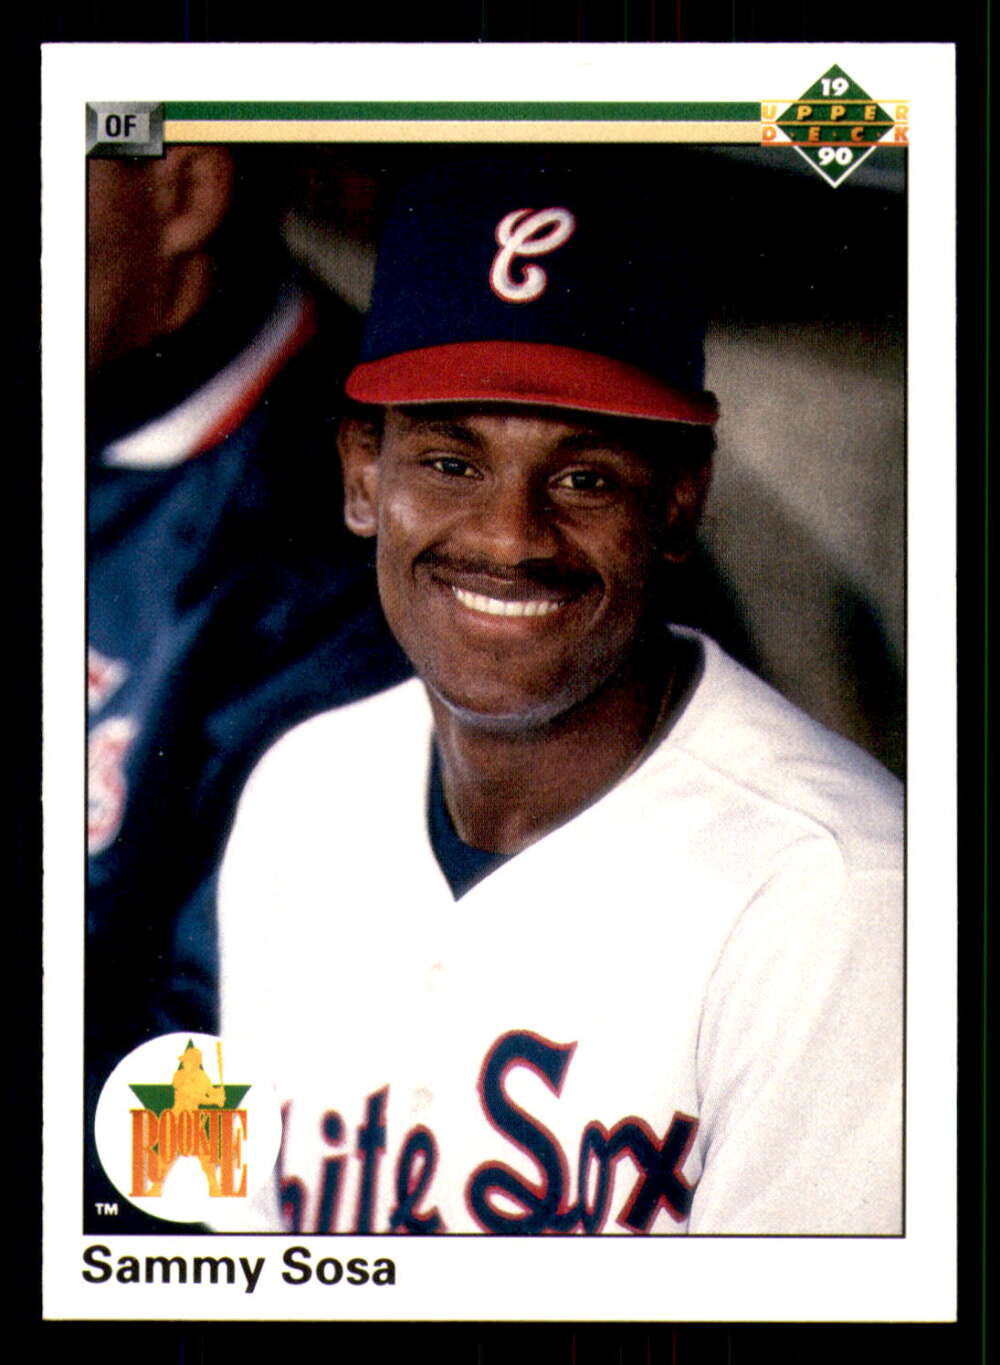 1990 Topps Baseball Card #692 Sammy Sosa Rookie Card PSA Grade 7